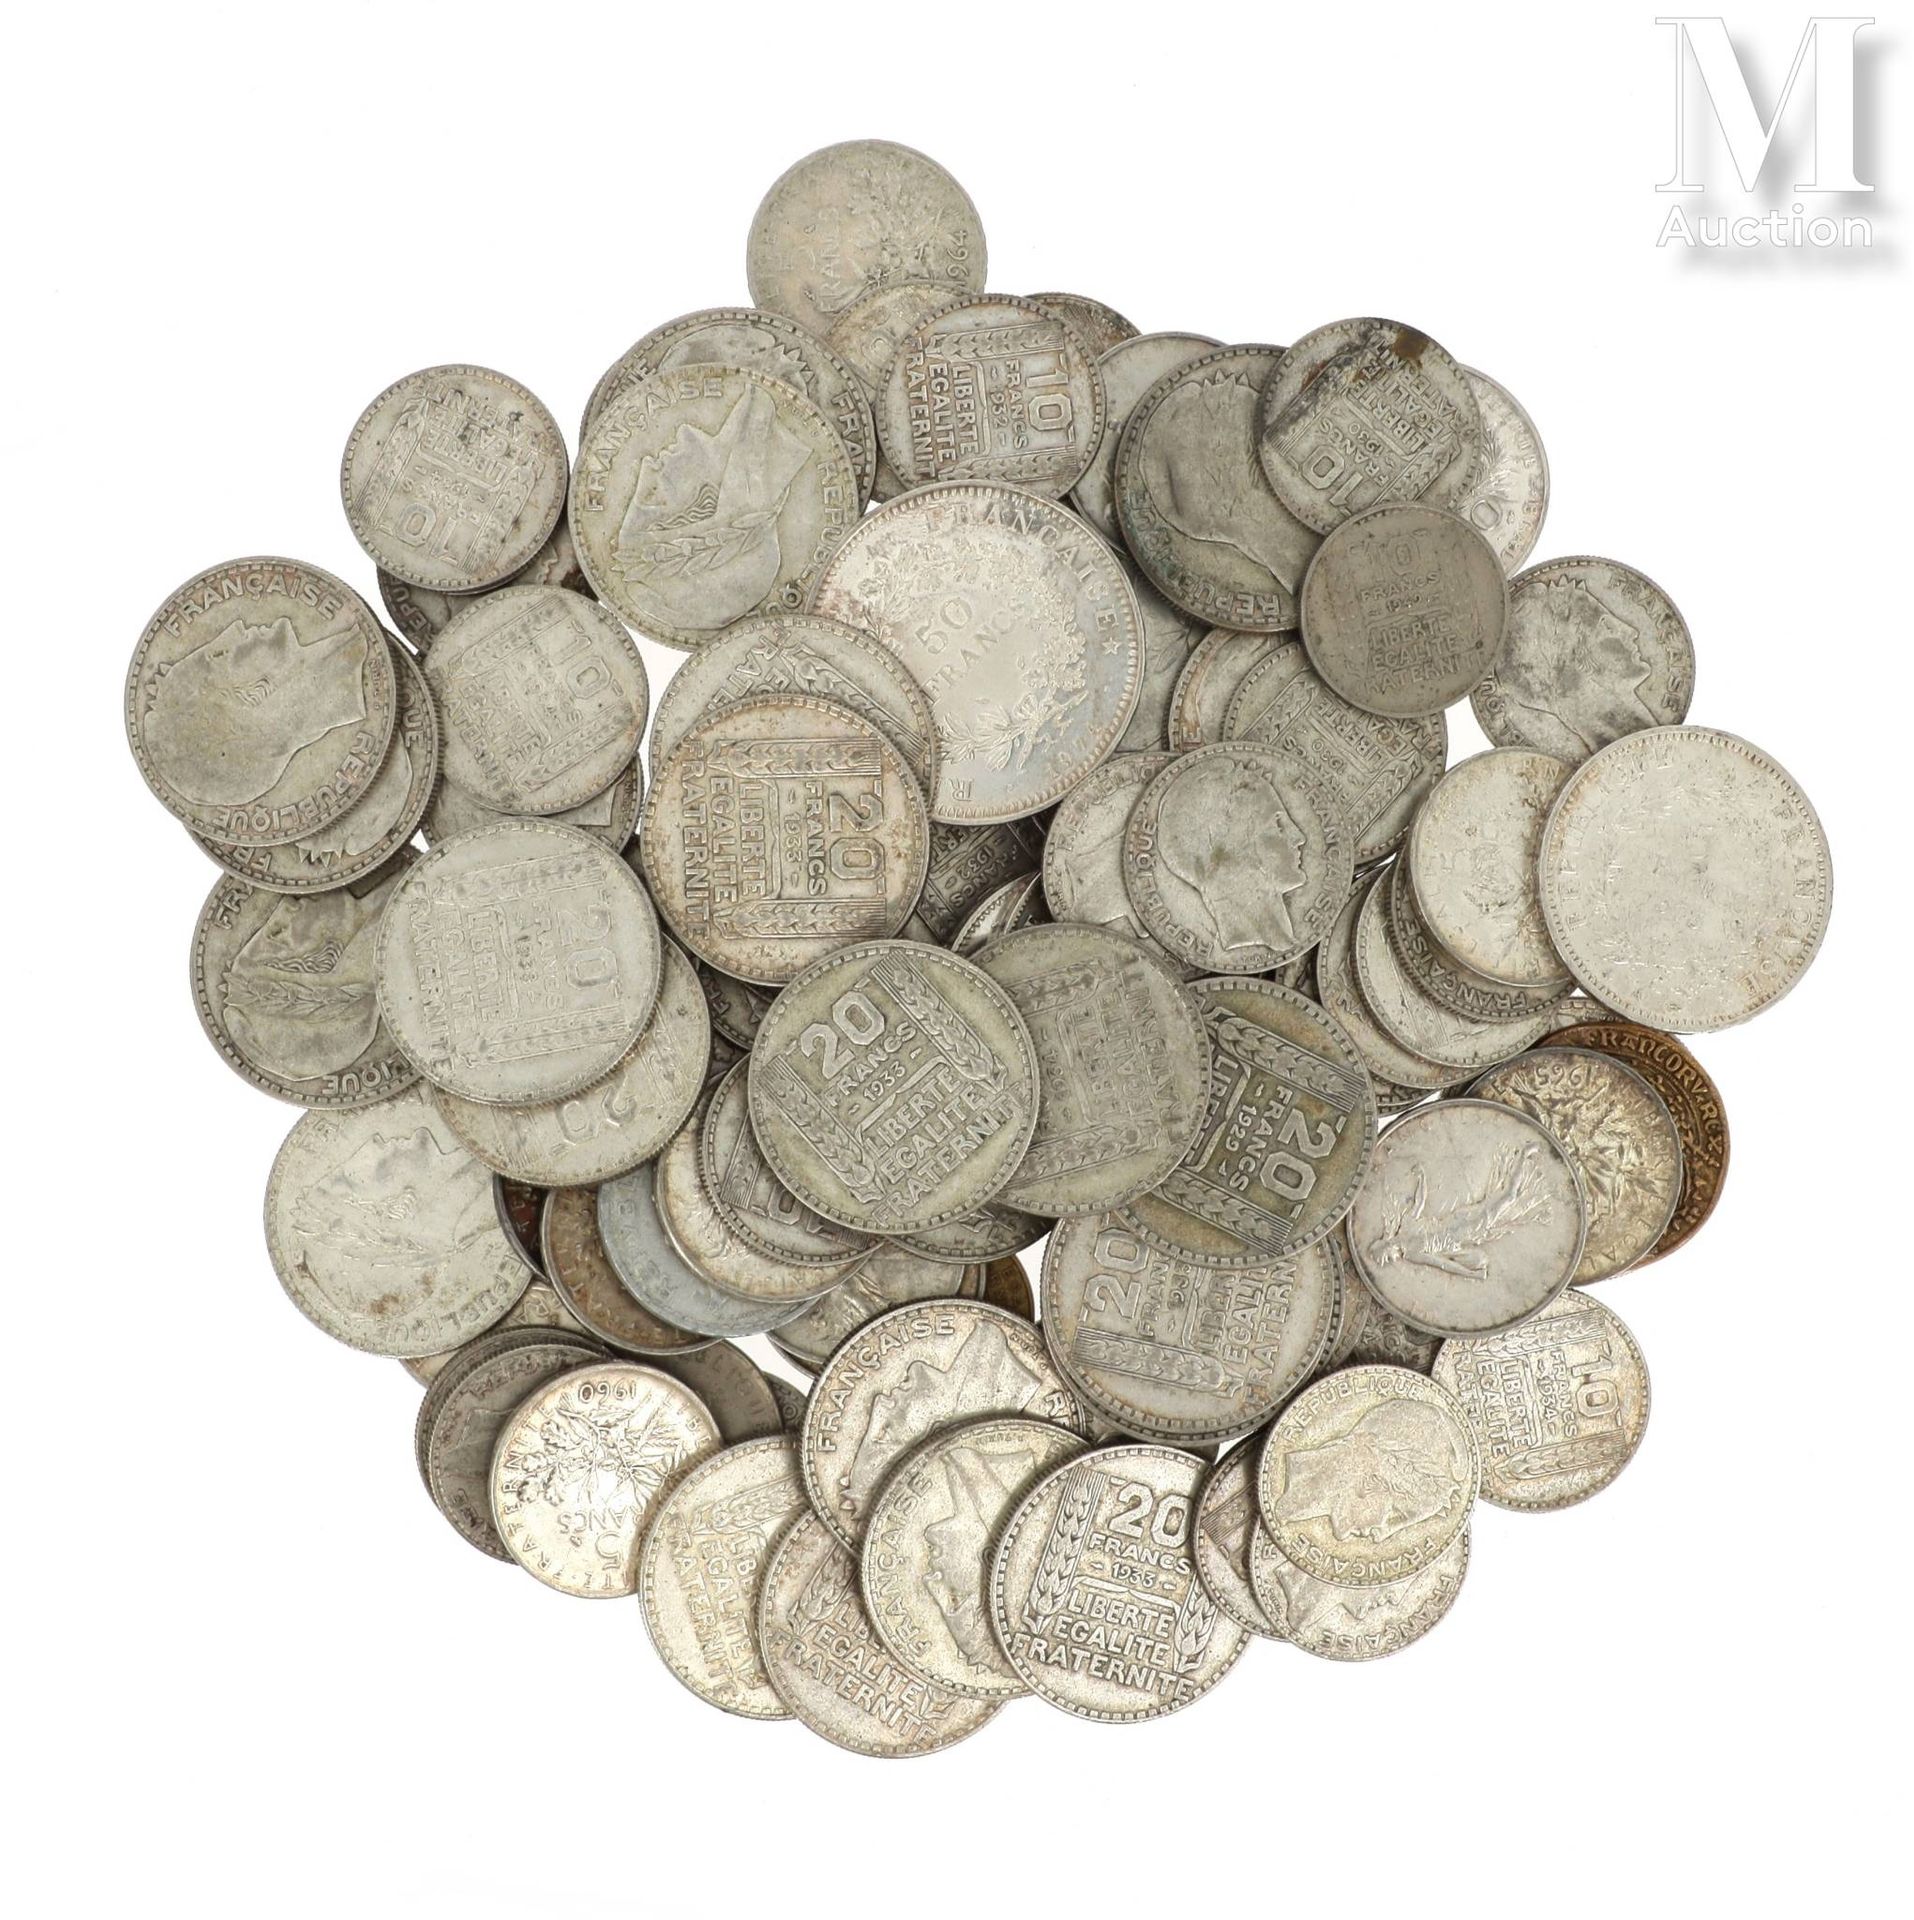 LOT DE PIECES DE MONNAIE EN ARGENT Lot von Silbermünzen bestehend aus : 

- 1 x &hellip;